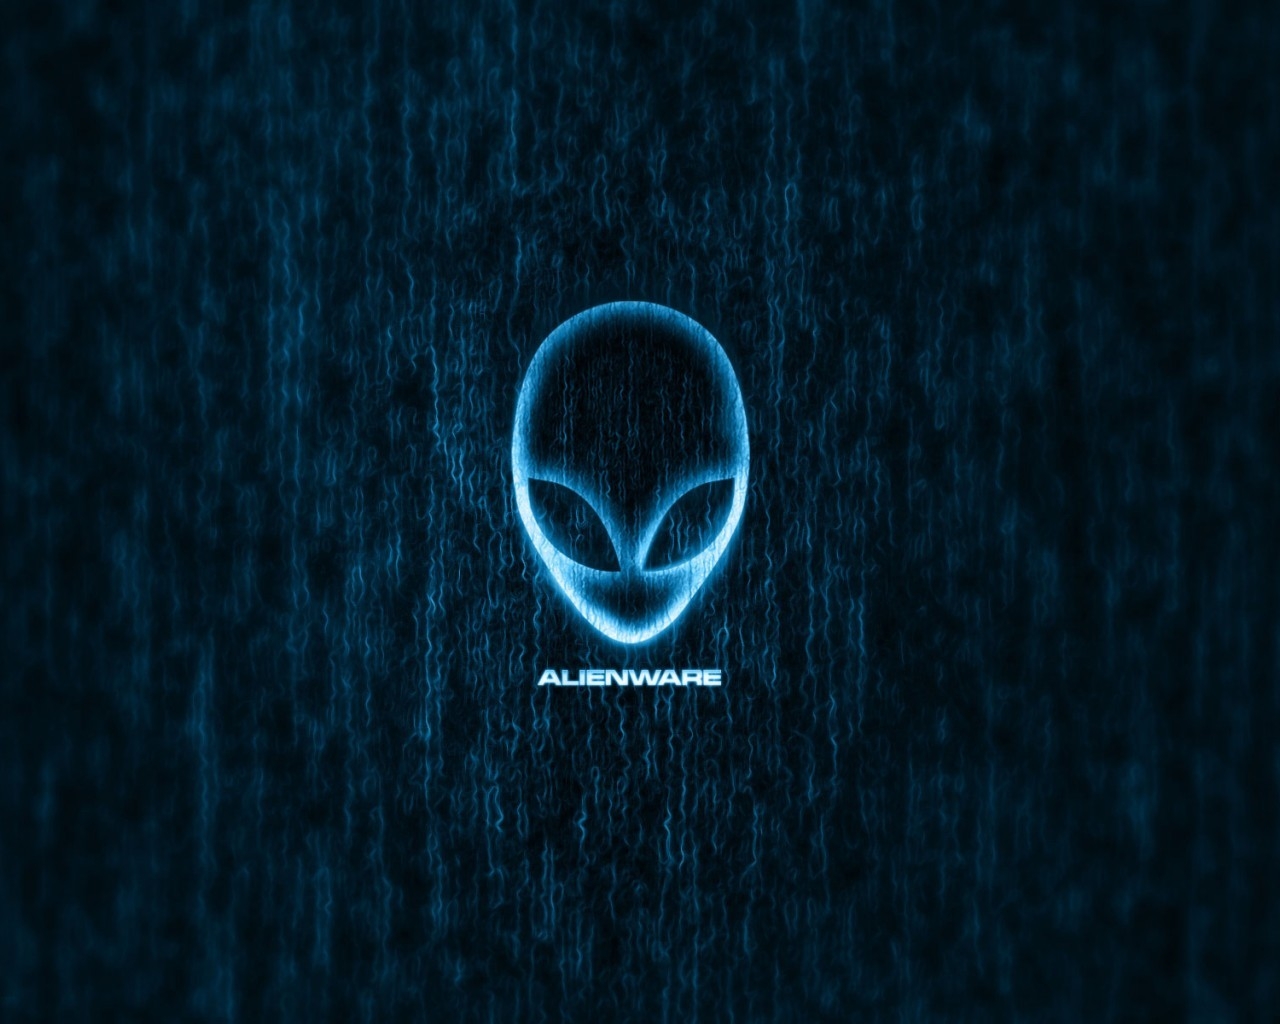 Alienware Company Logo for 1280 x 1024 resolution